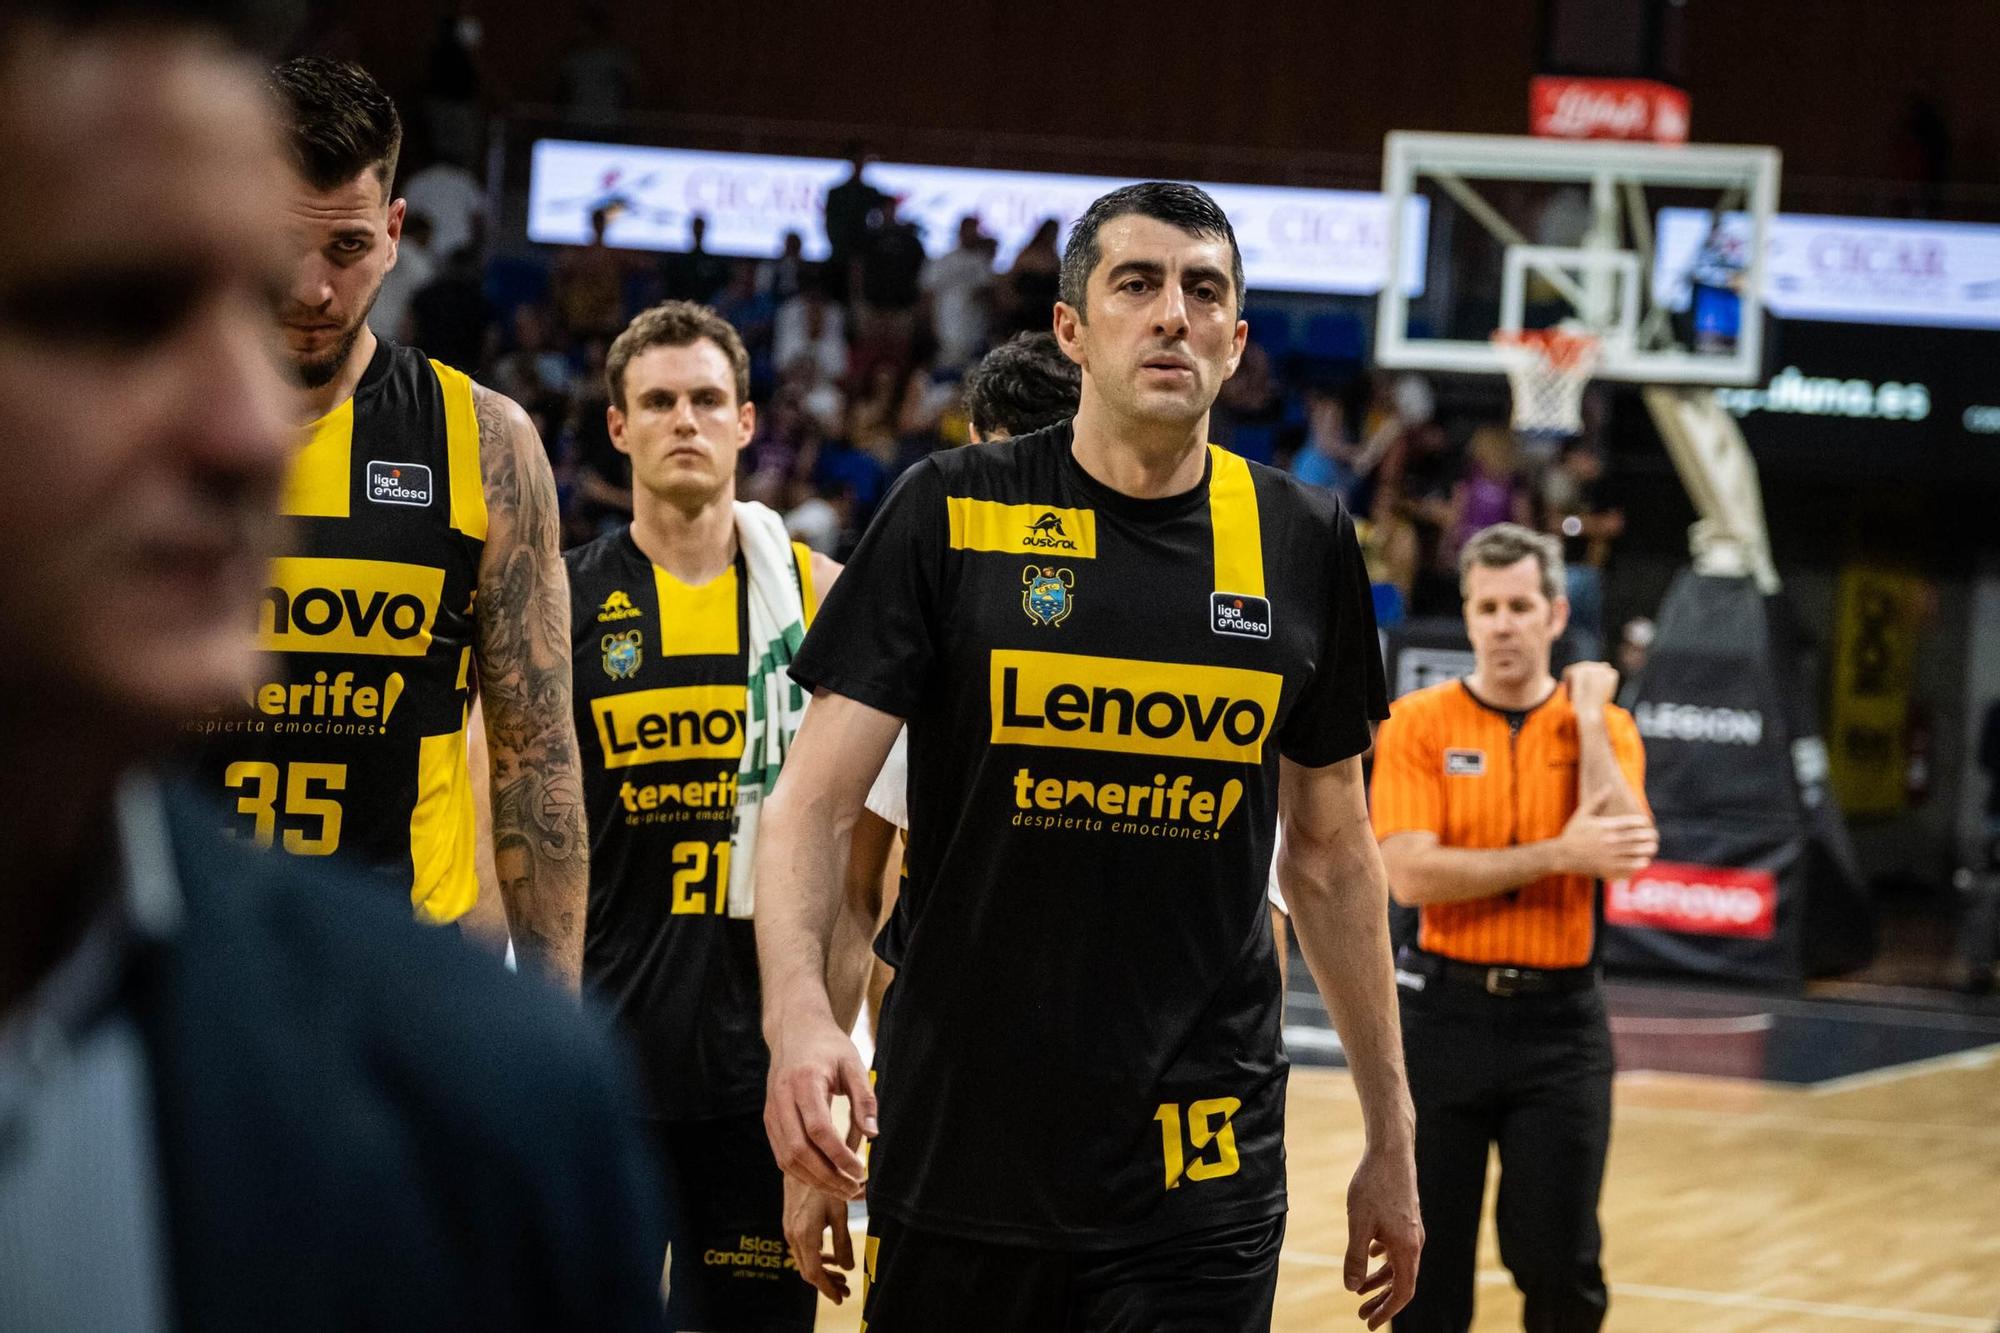 Lenovo Tenerife - Surne Bilbao Basket